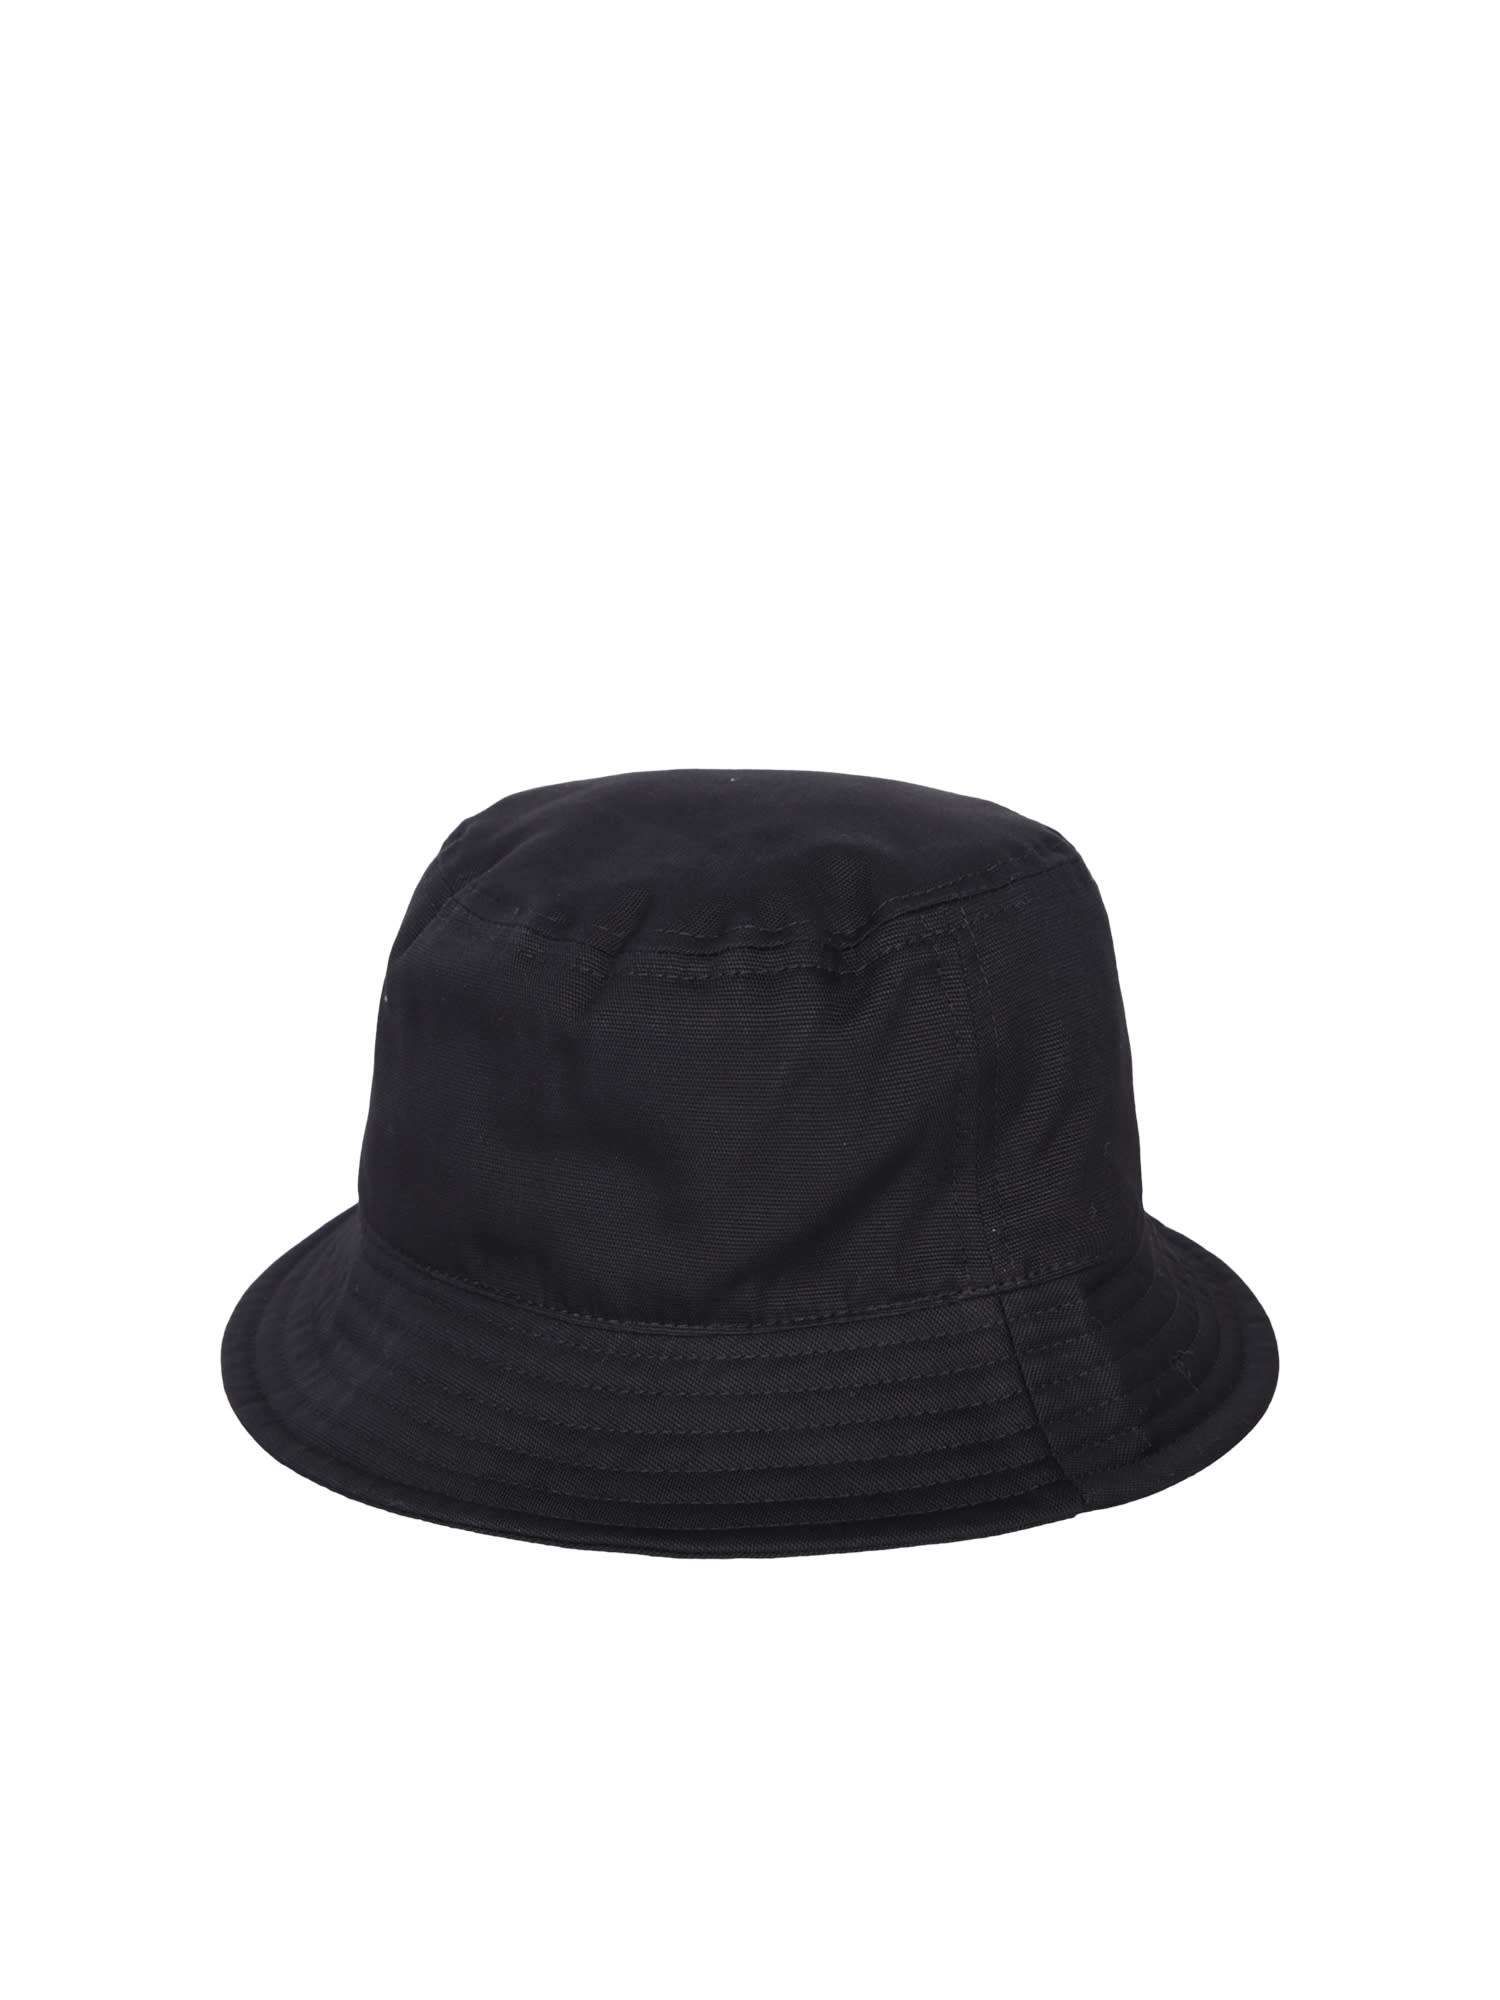 Shop Vivienne Westwood Black Bucket Hat